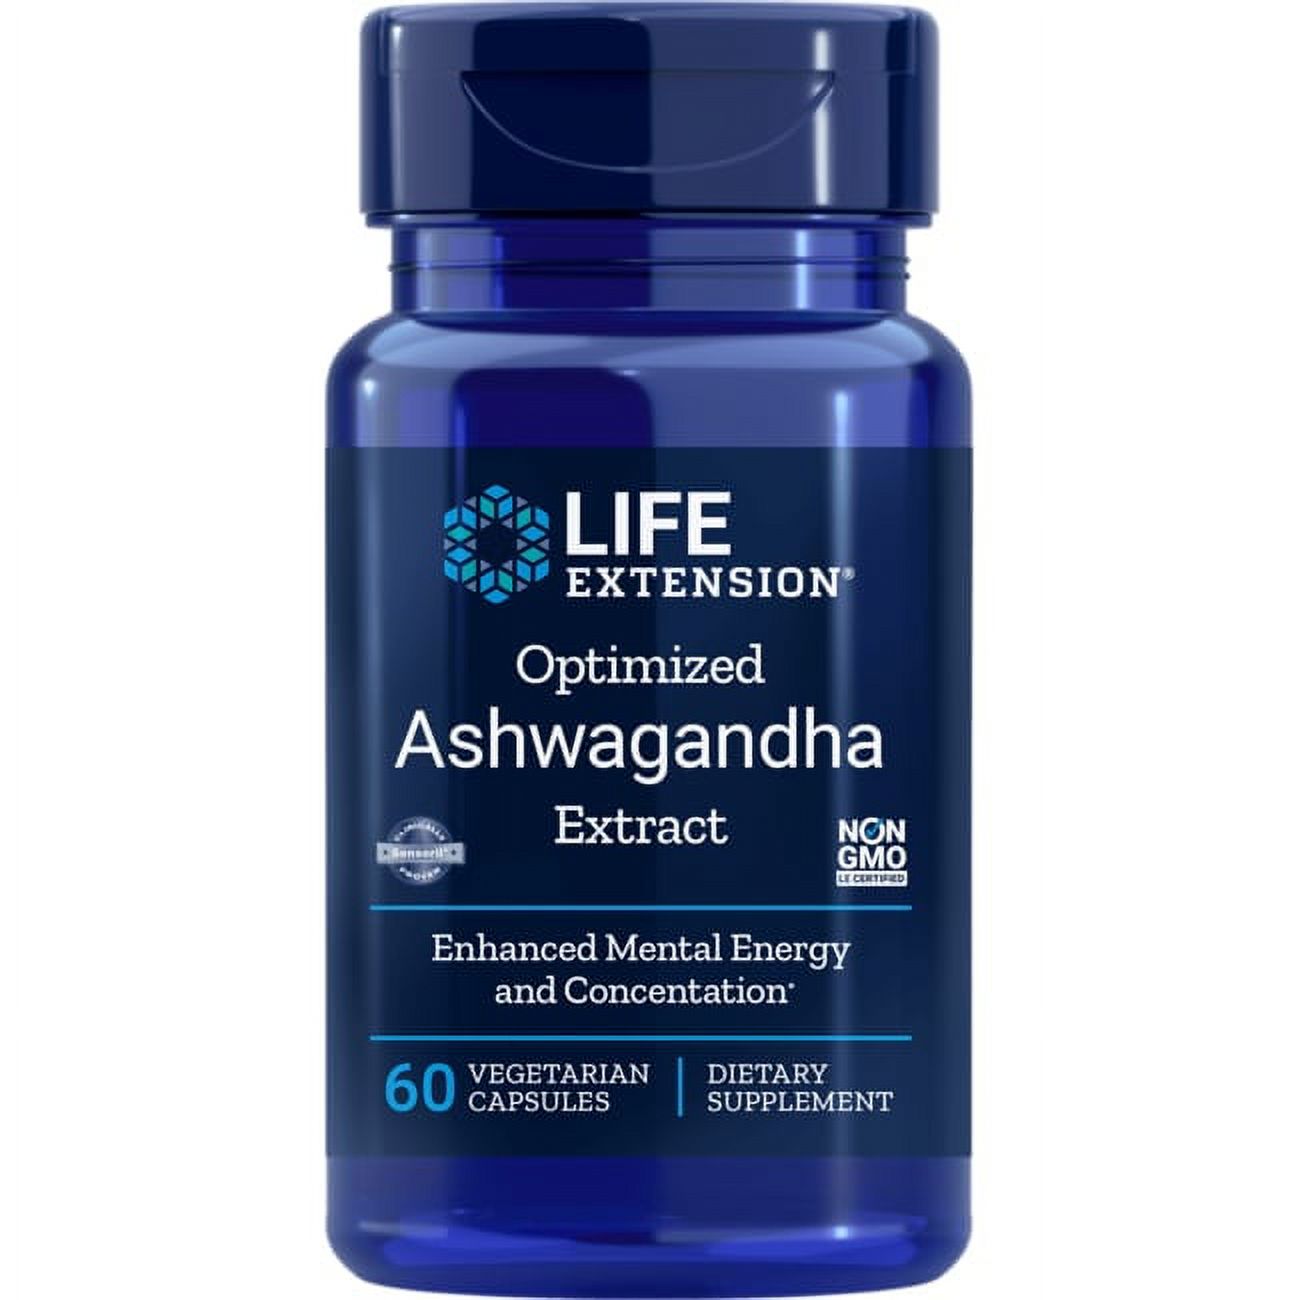 Life Extension - Optimized Ashwagandha Extract - Sensoril - 60 Vegetarian Capsules - image 1 of 2